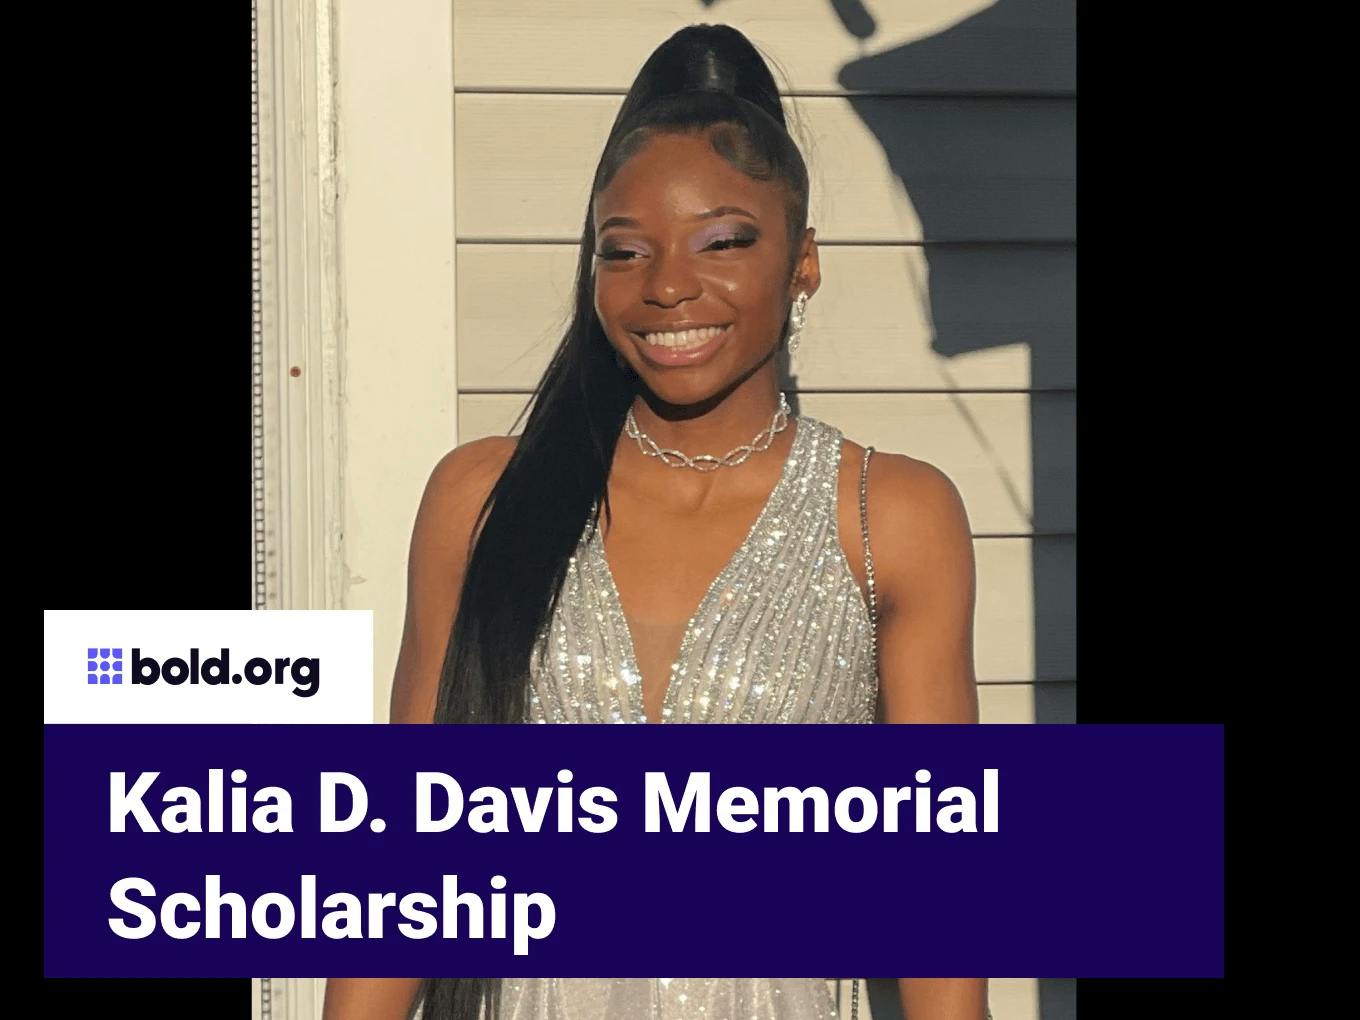 Kalia D. Davis Memorial Scholarship